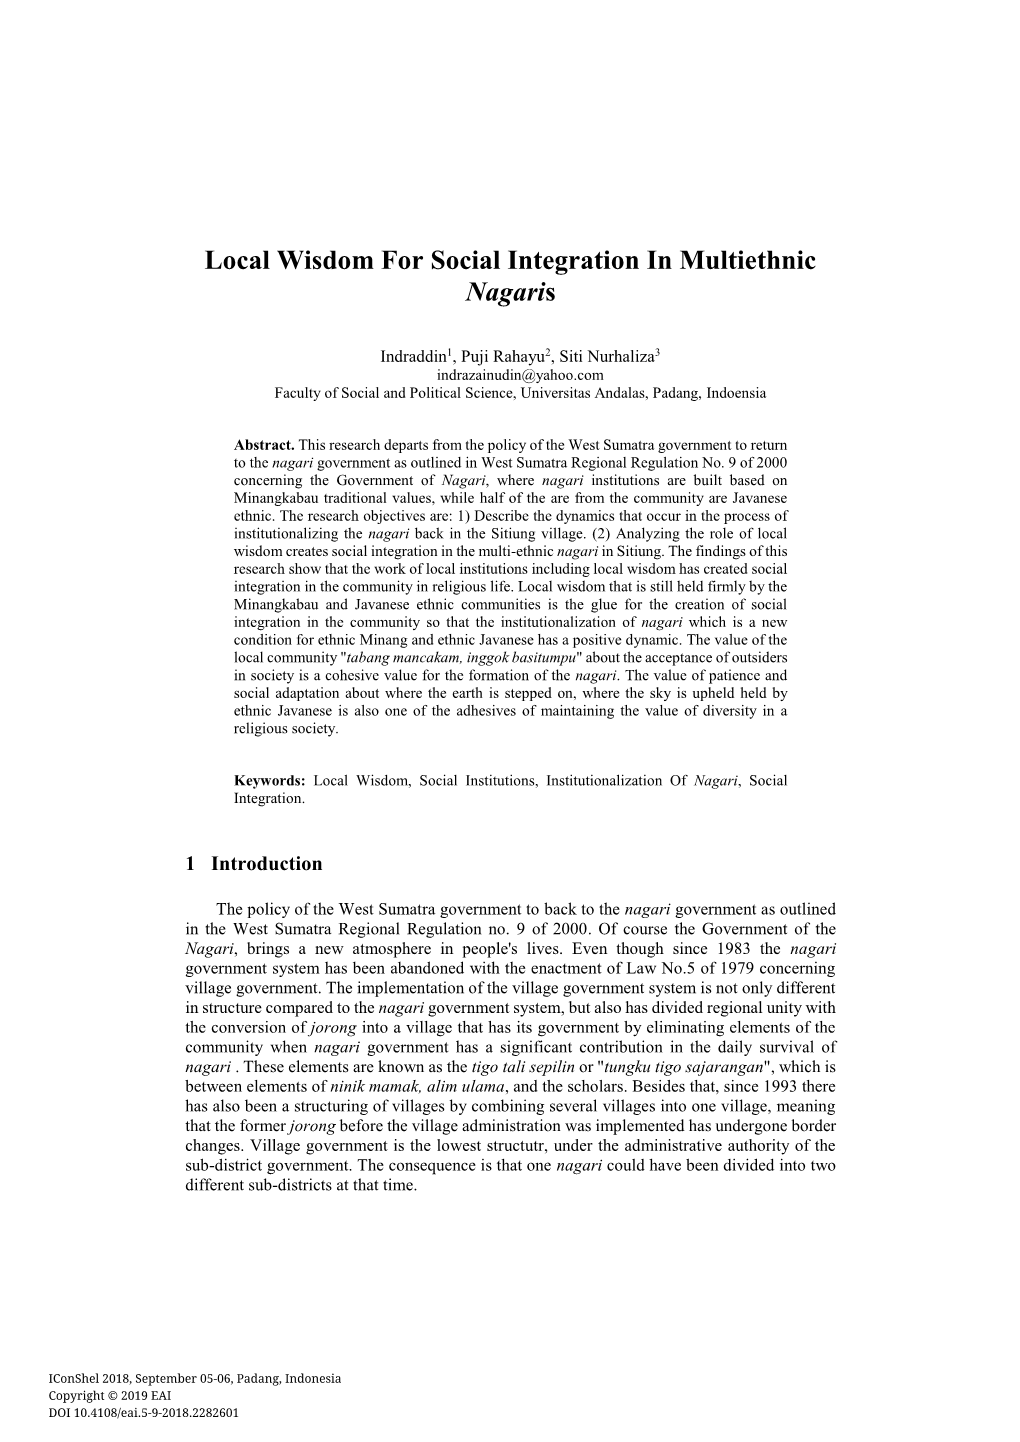 Local Wisdom for Social Integration in Multiethnic Nagaris